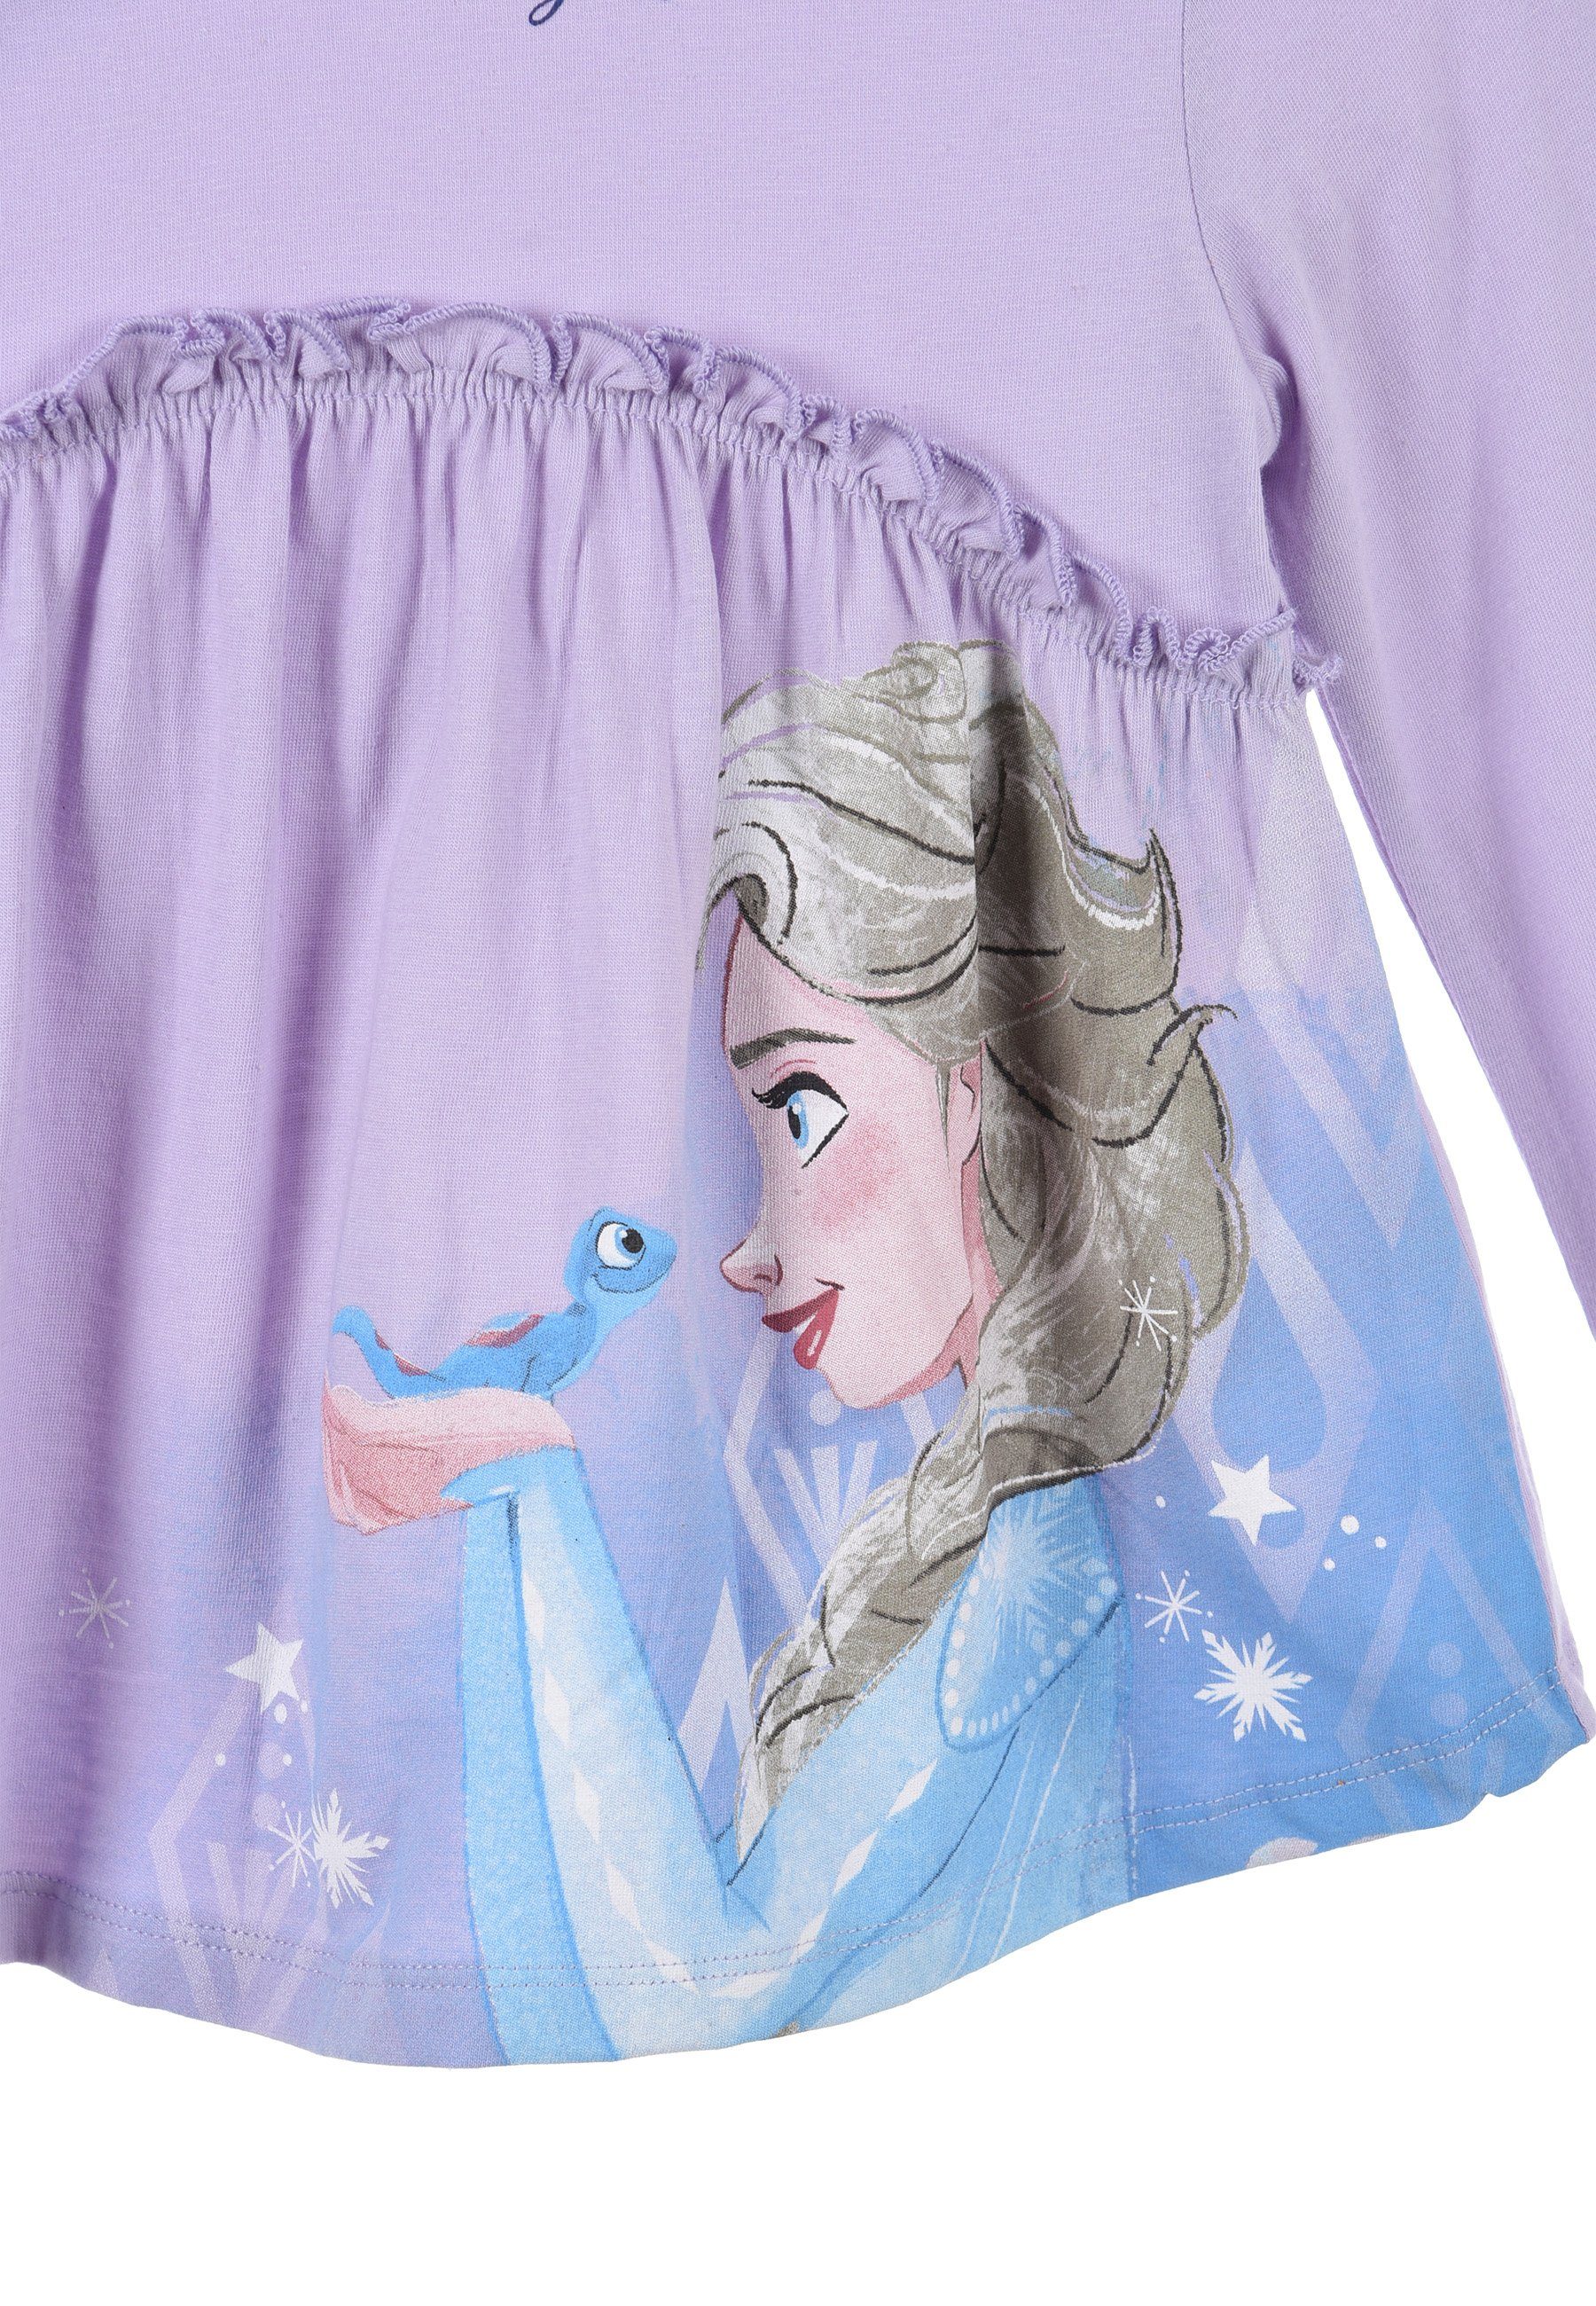 Frozen Elsa Lila Disney Eiskönigin Lonsleeve Die Mädchen Langarm-Shirt Langarmshirt